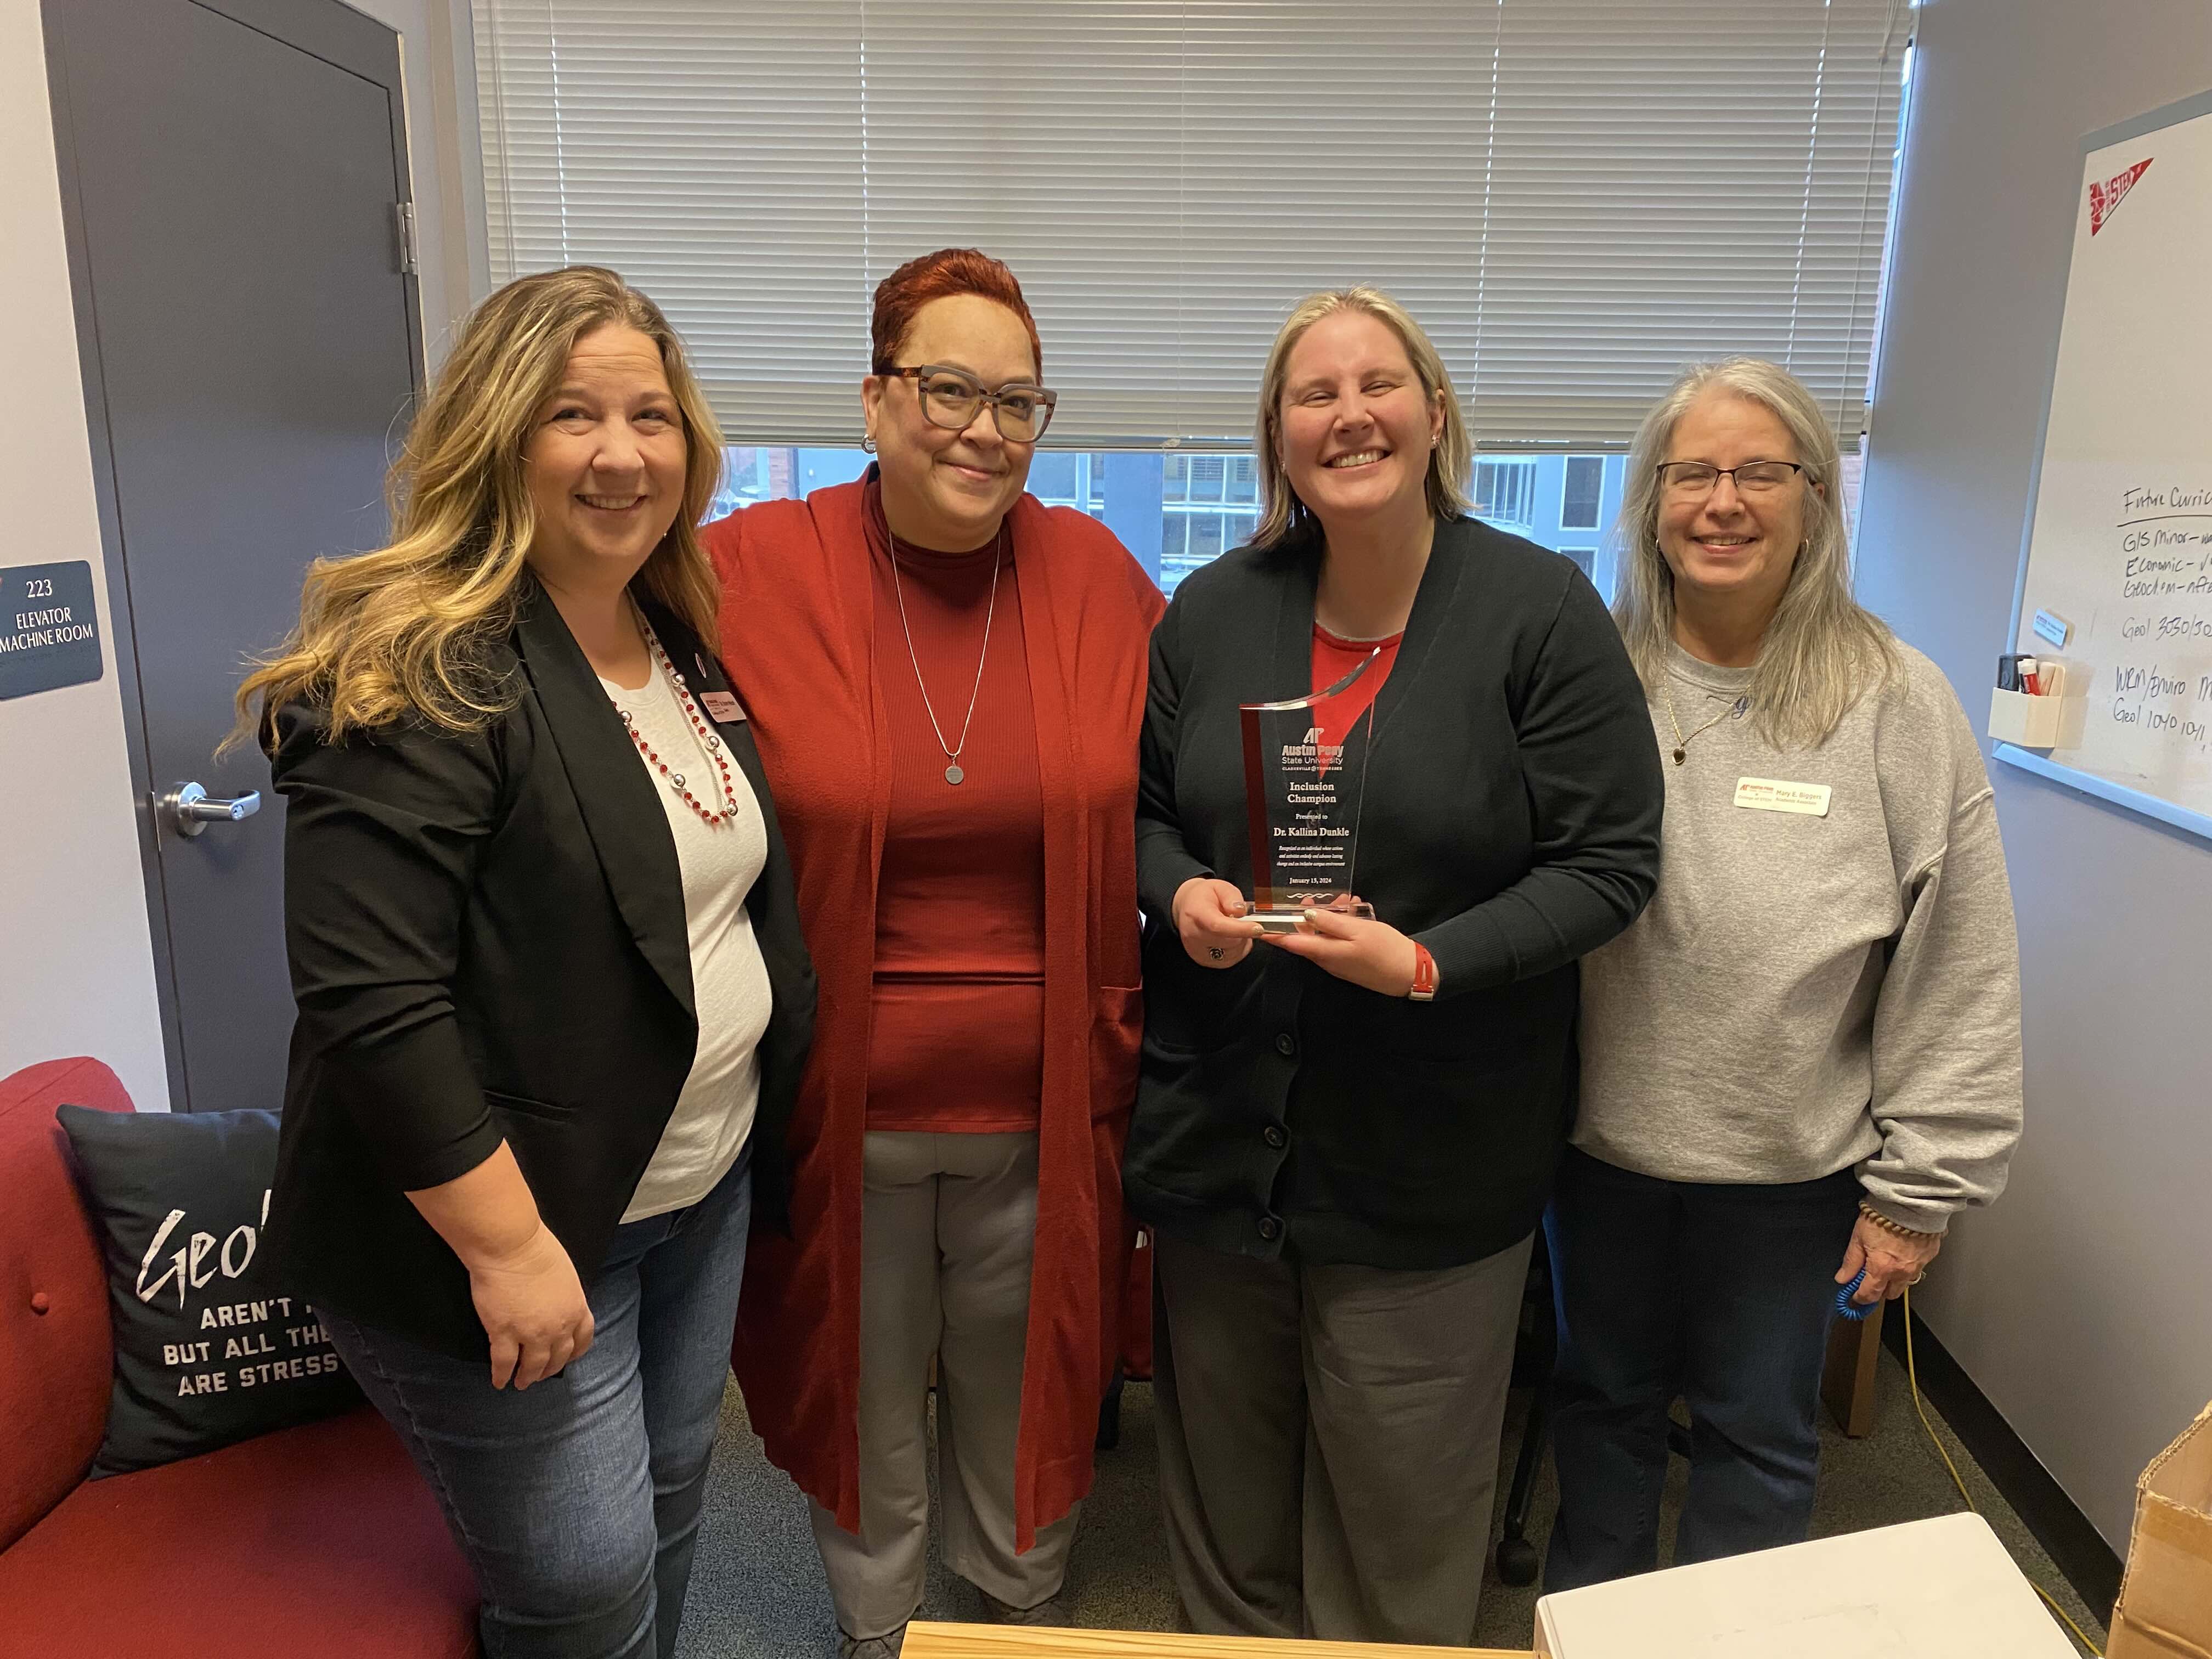 Austin Peay’s Dr. Kallina Dunkle wins Inclusion Champion Award for DEI work